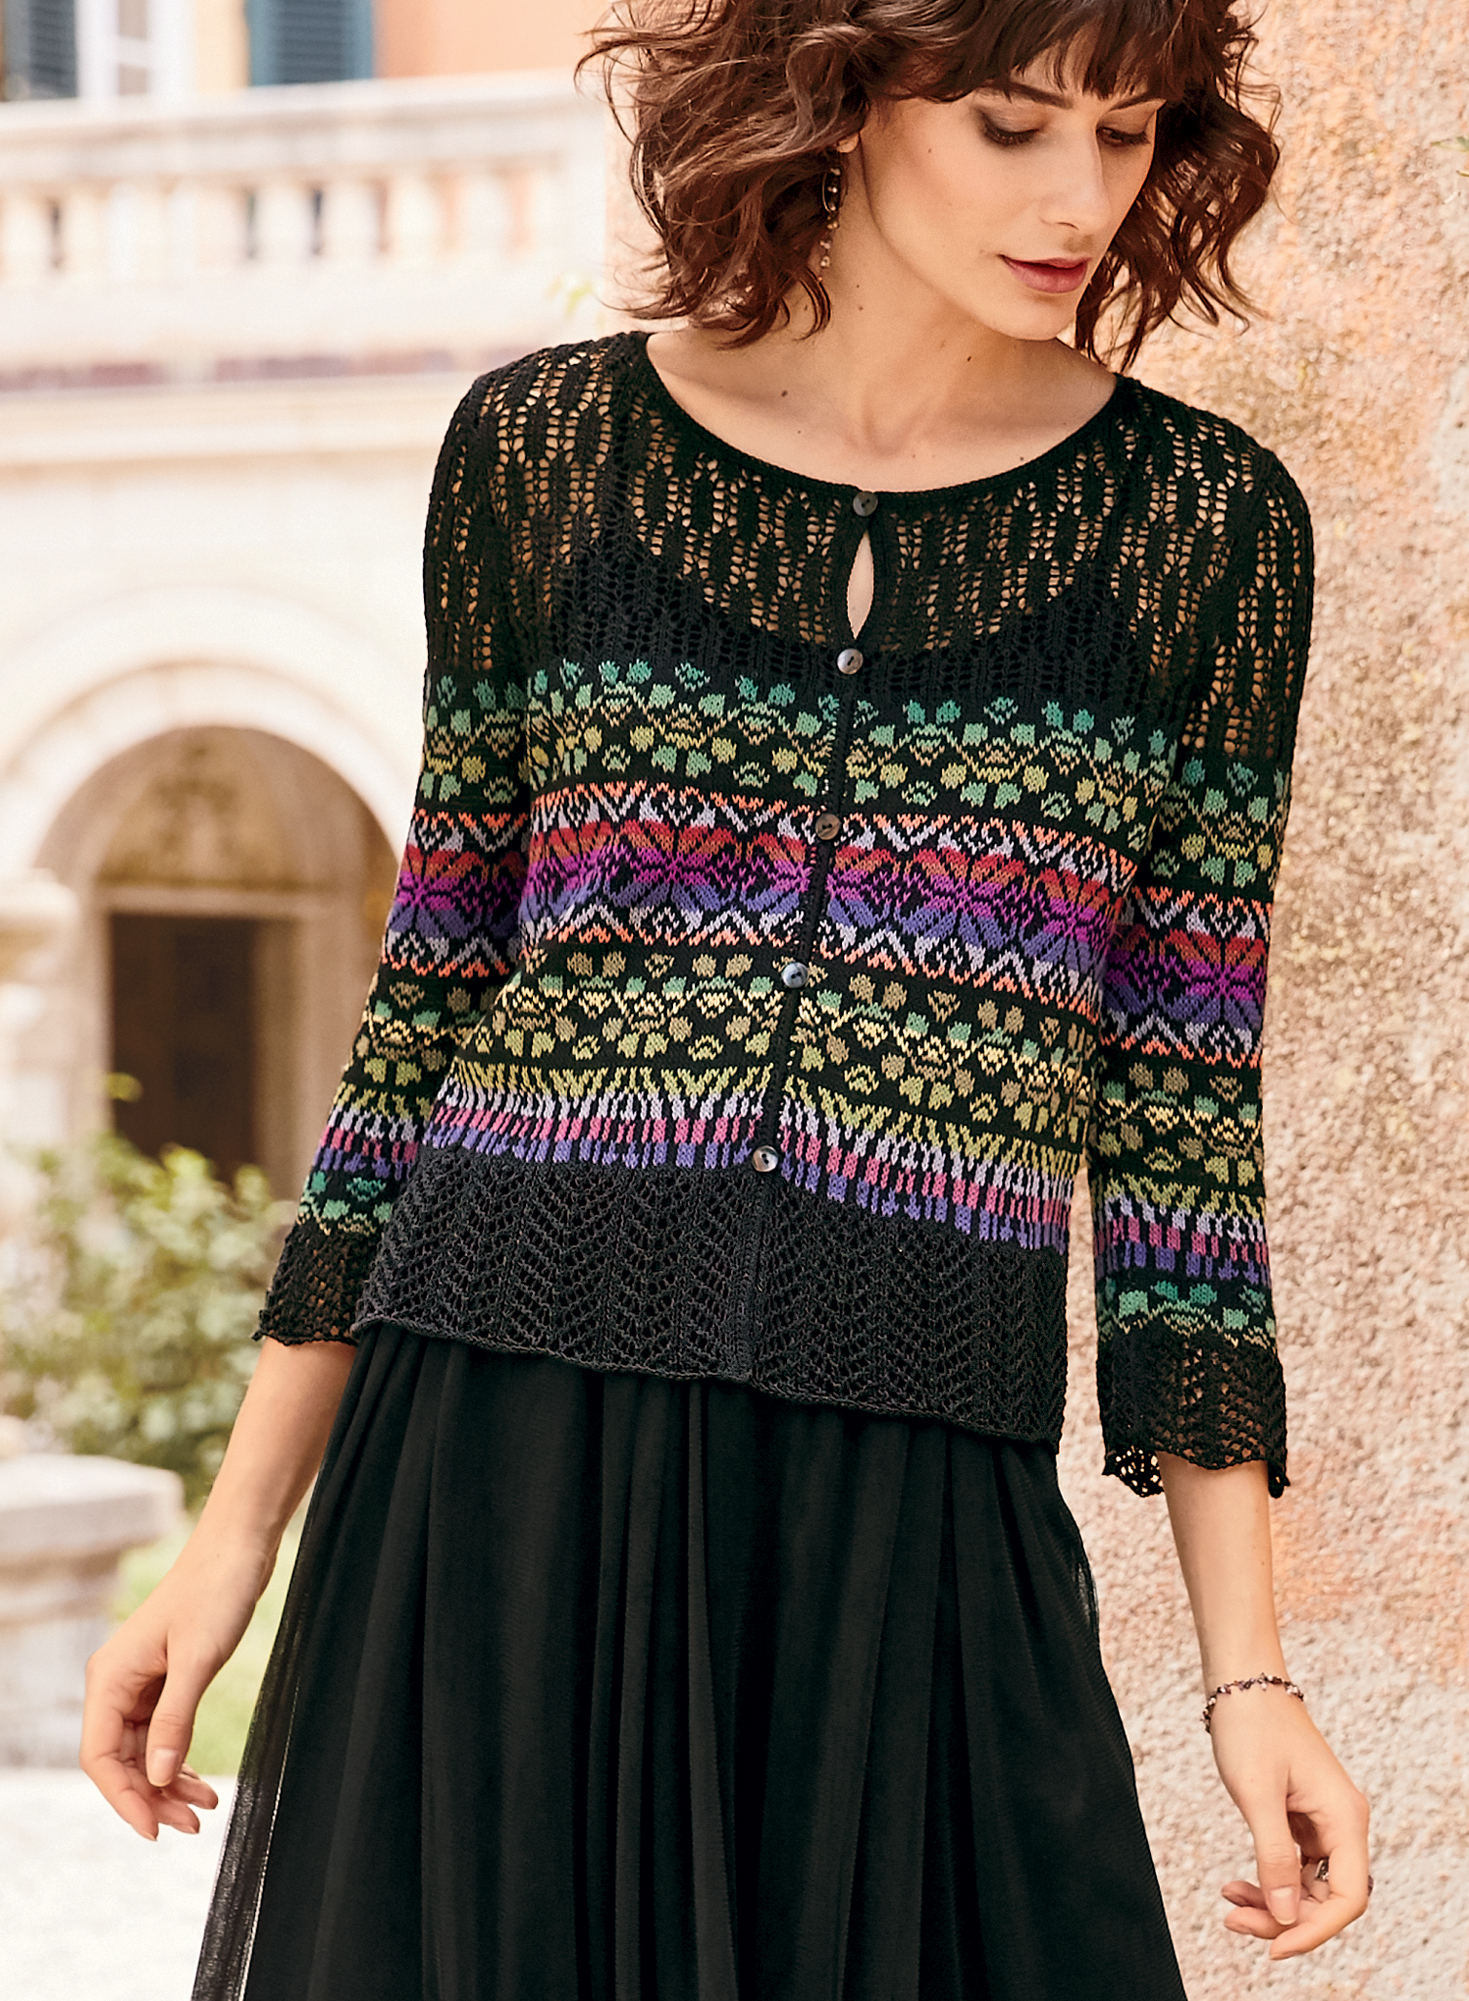 Ventura Vision Beige Crochet Lace-Up Midi Dress